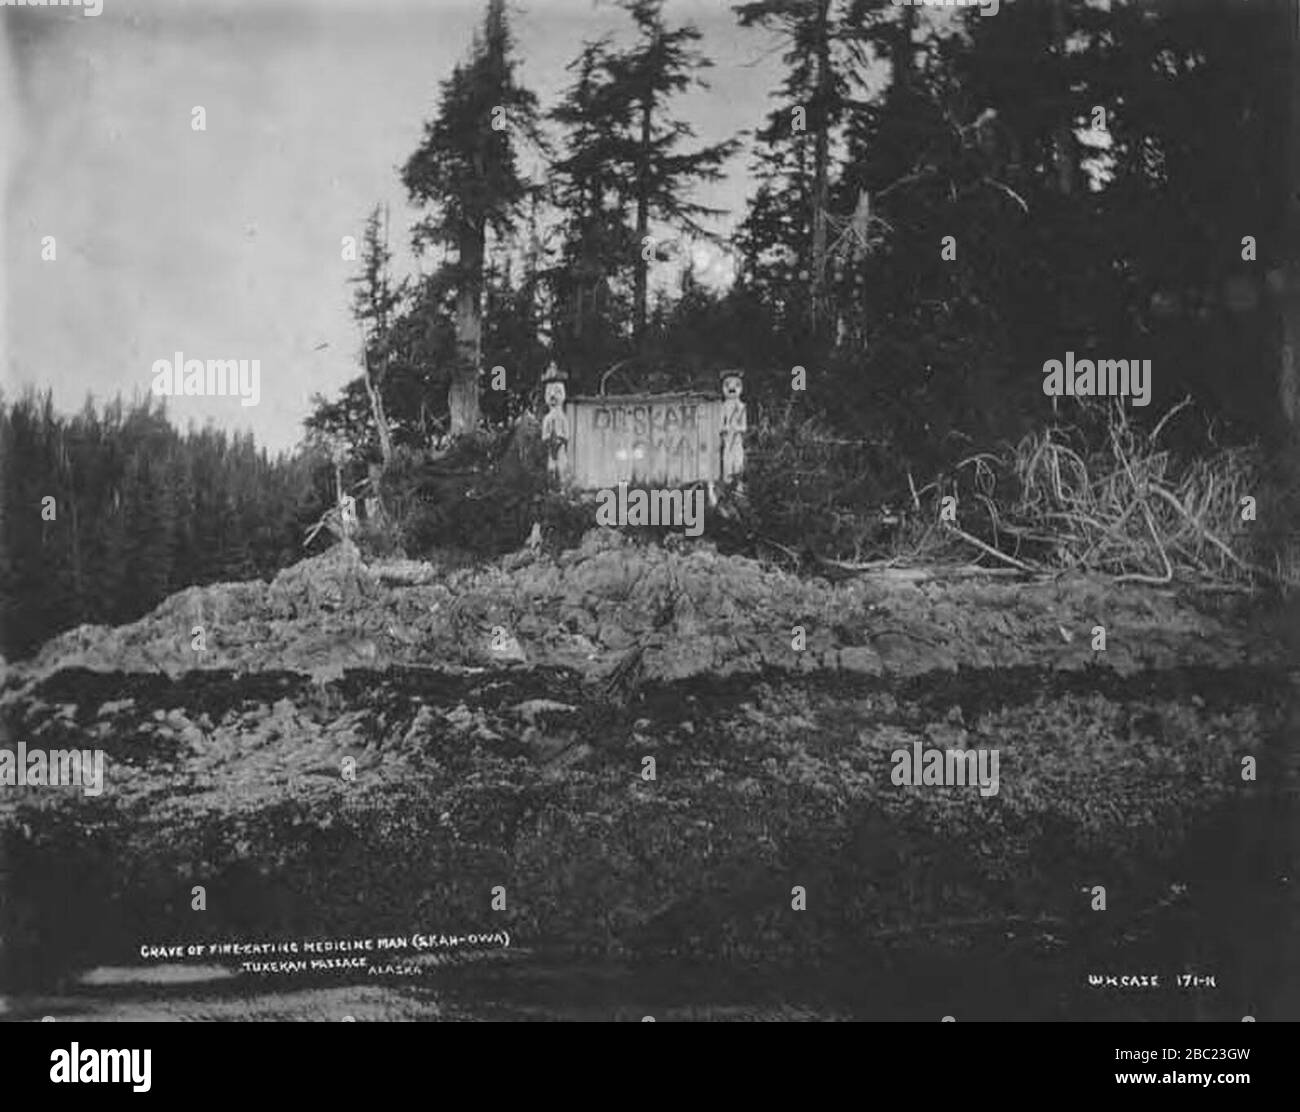 Grave of Skah-owa, the Fire-eating Medicine Man, at Tuxekan Passage, Alaska, circa 1908 (AL CA 3351). Stock Photo